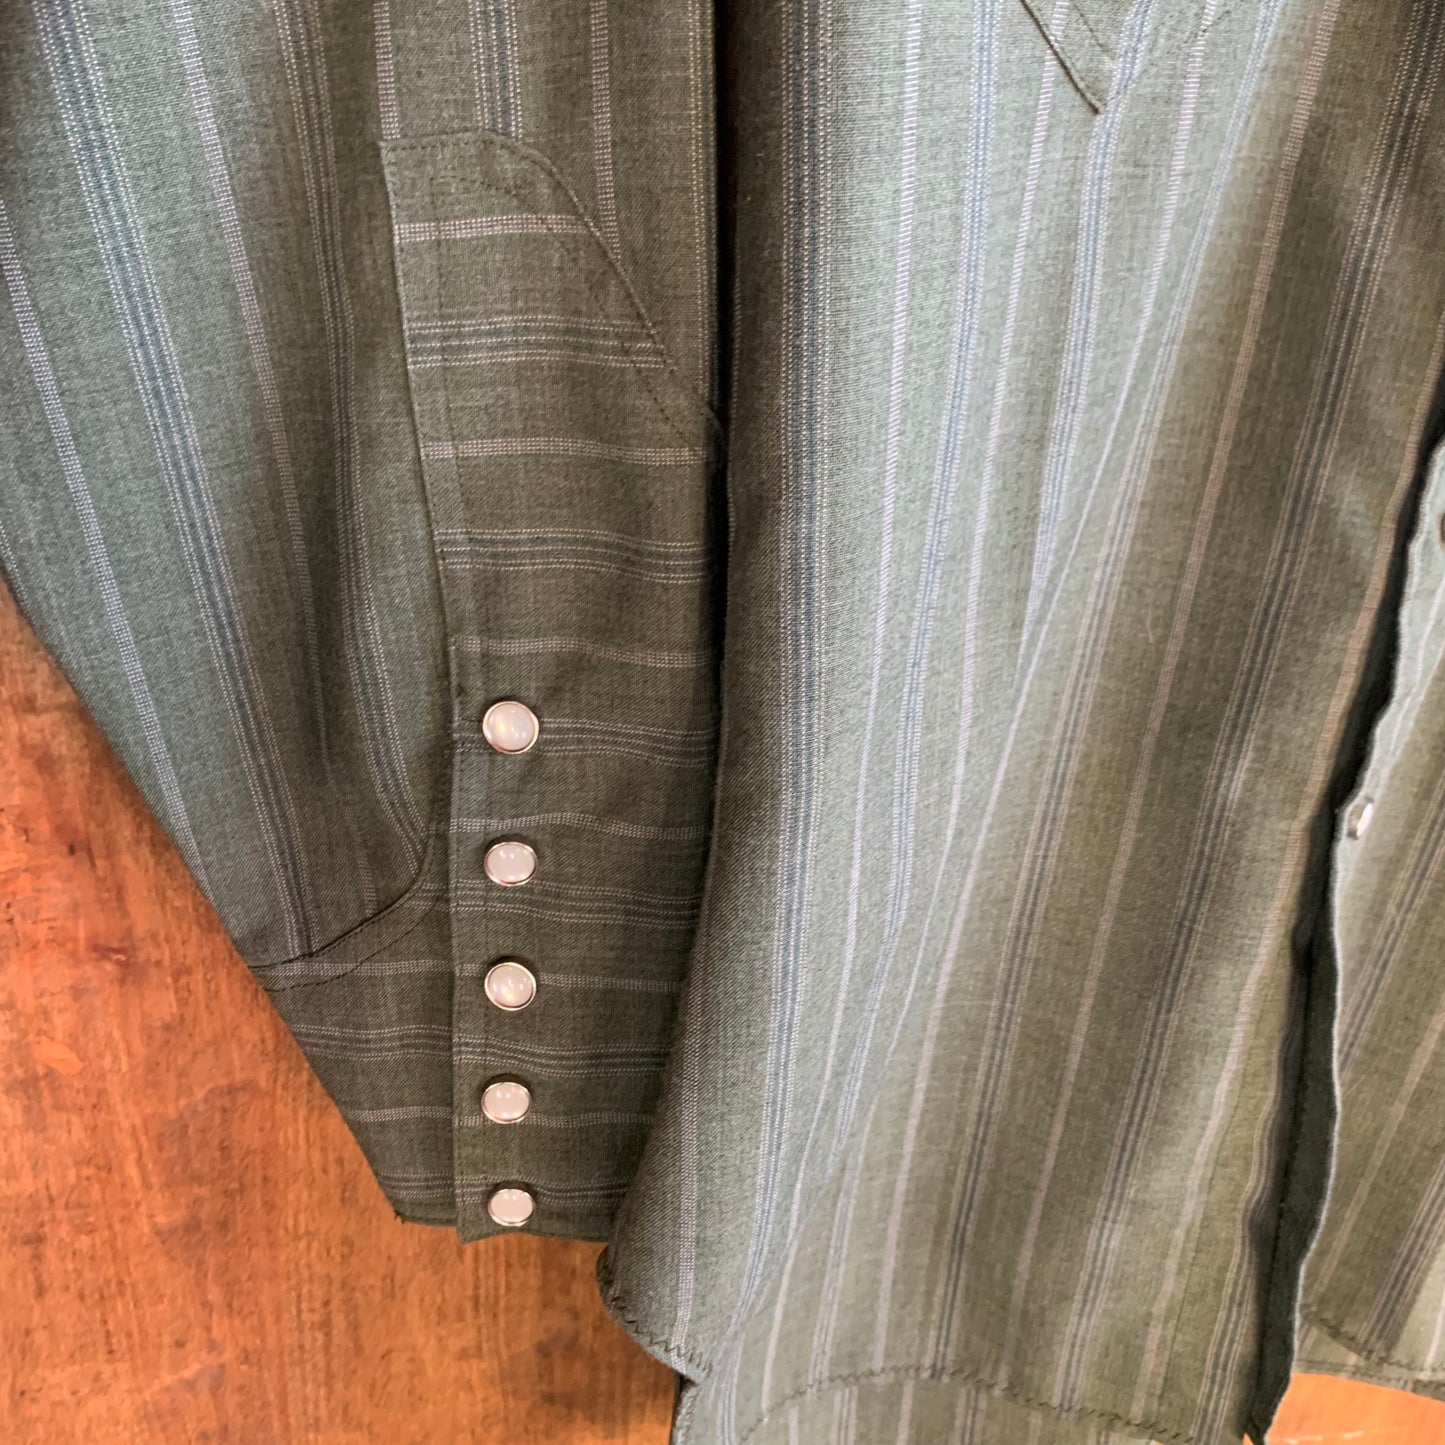 1950s Striped Green Gabardine Pearl Snap Shirt (S/M)